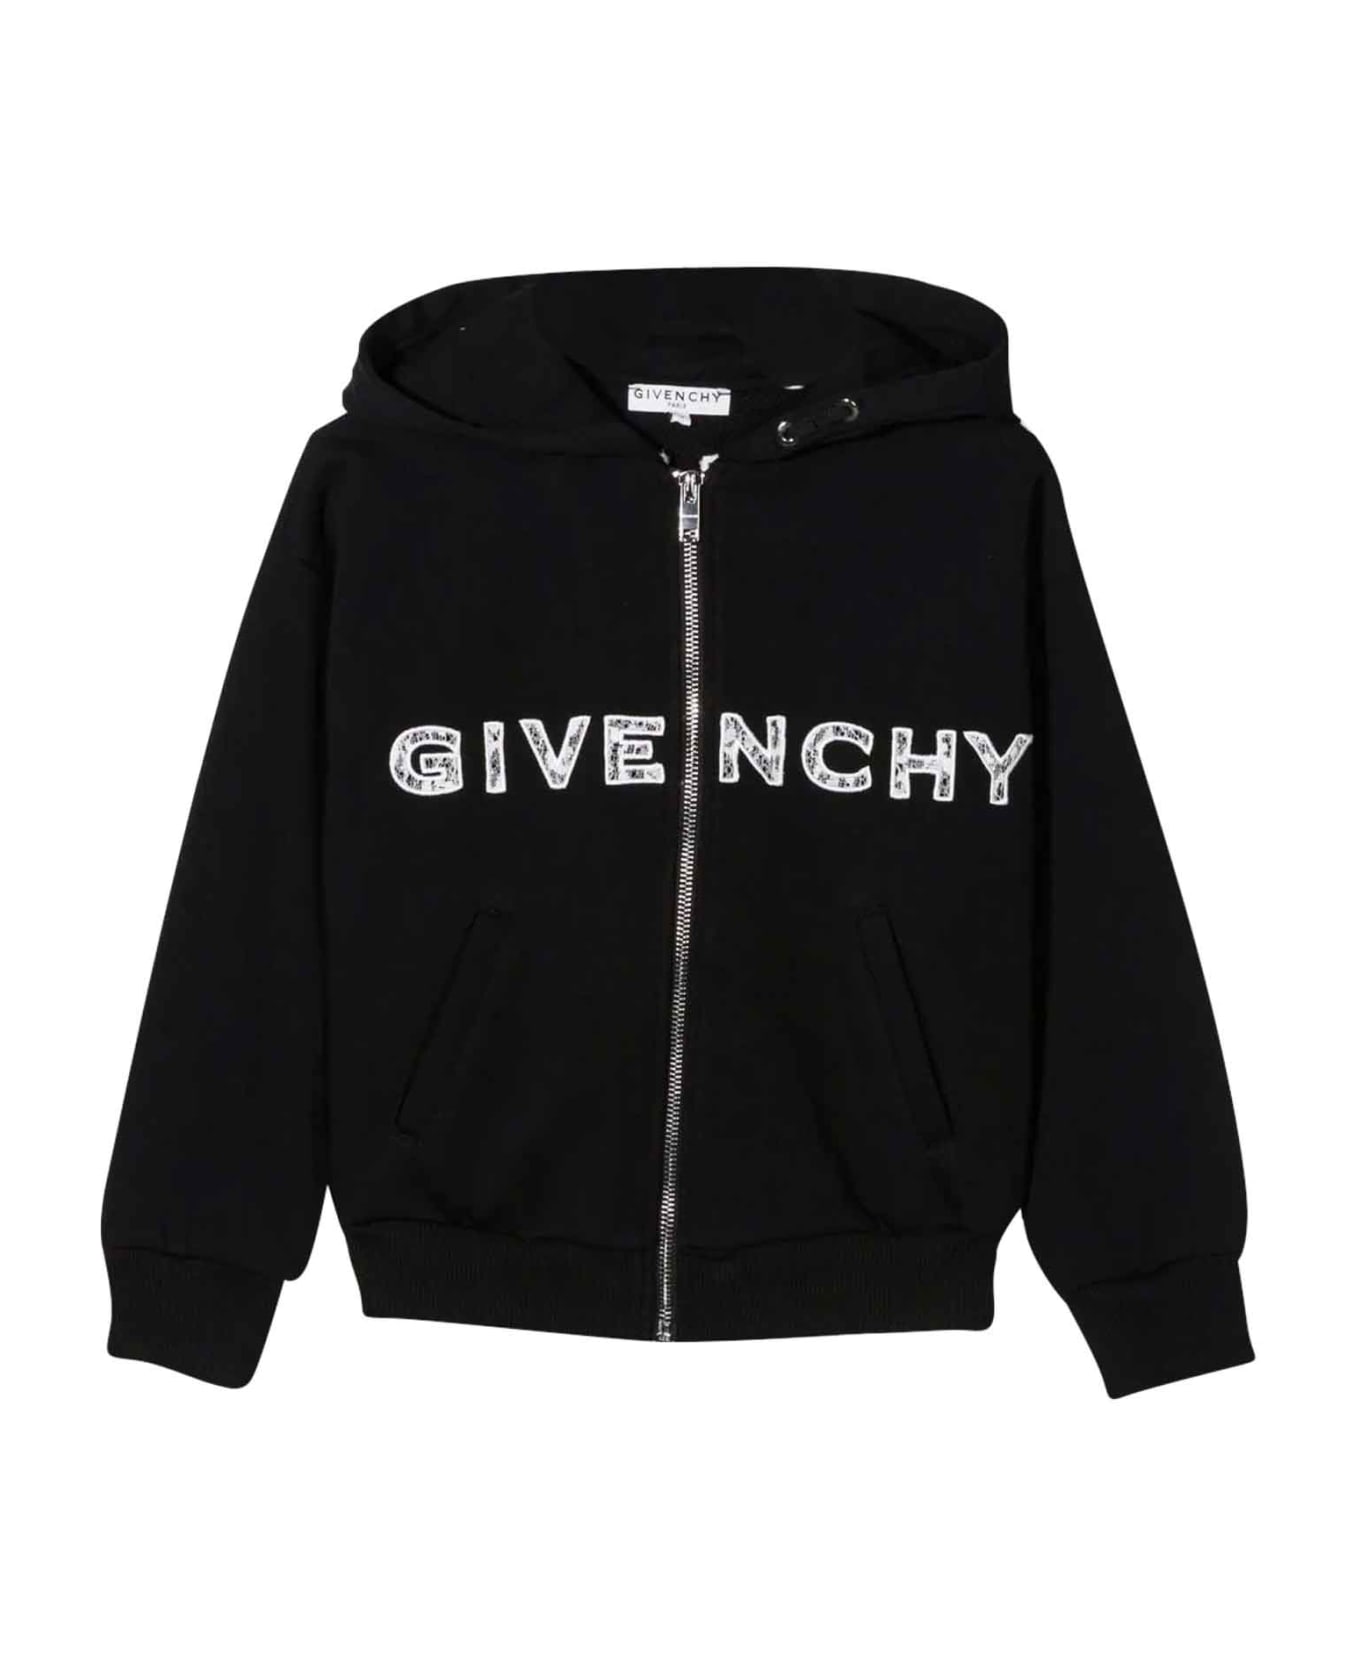 Givenchy Black Sweatshirt With Print , Zip And Hood